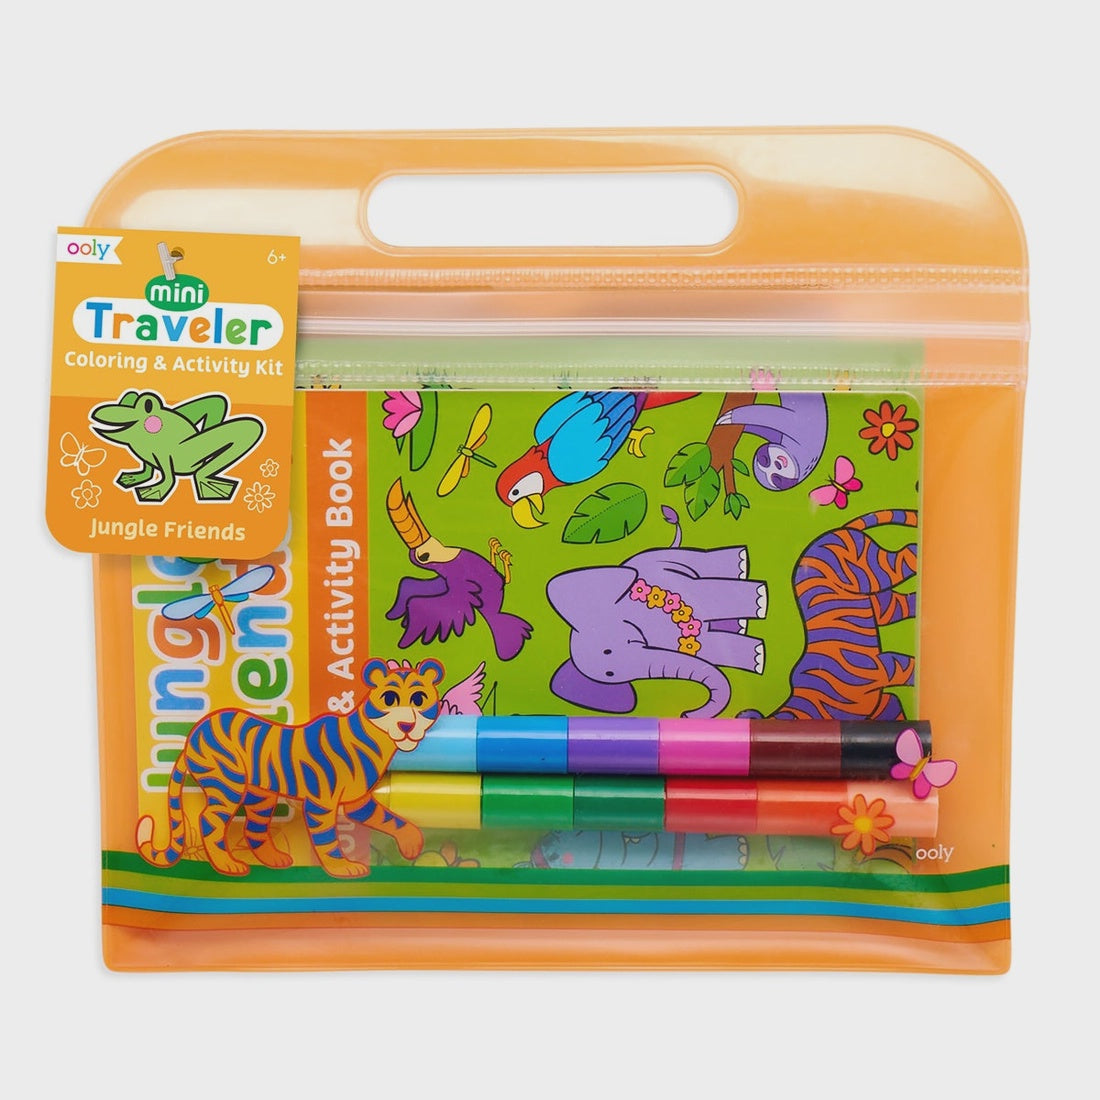 Mini Traveler Coloring & Activity Kit- Jungle Friends